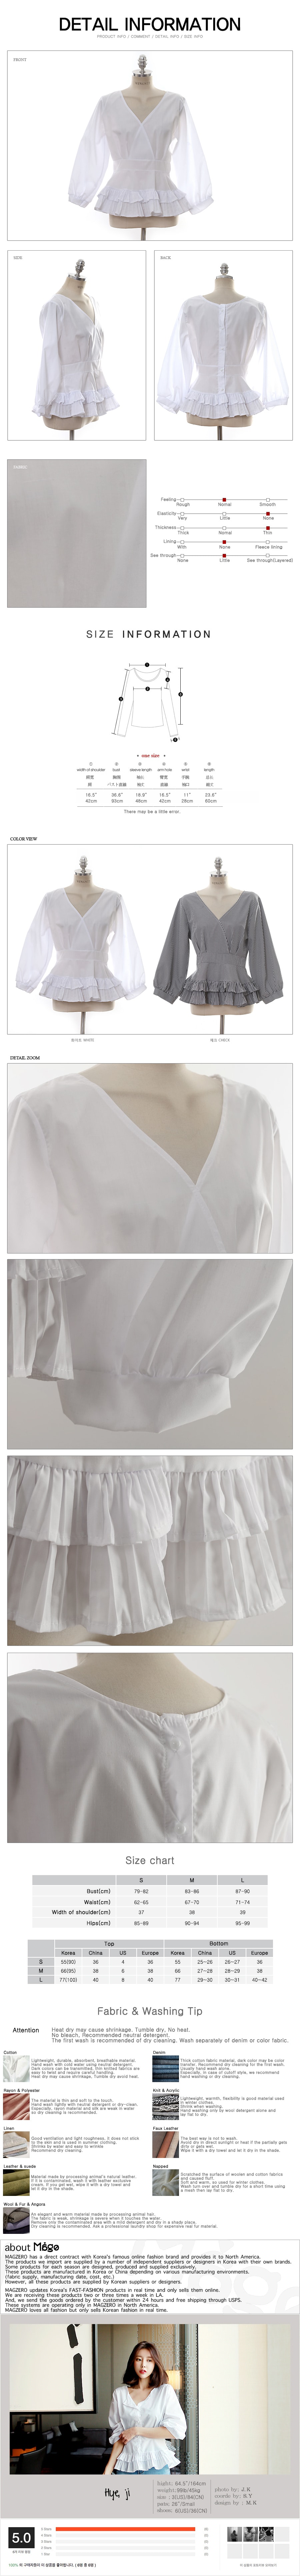 KOREA Puff sleeve Ruffle Wrap Blouse #Ivory One Size(S-M) [Free Shipping]